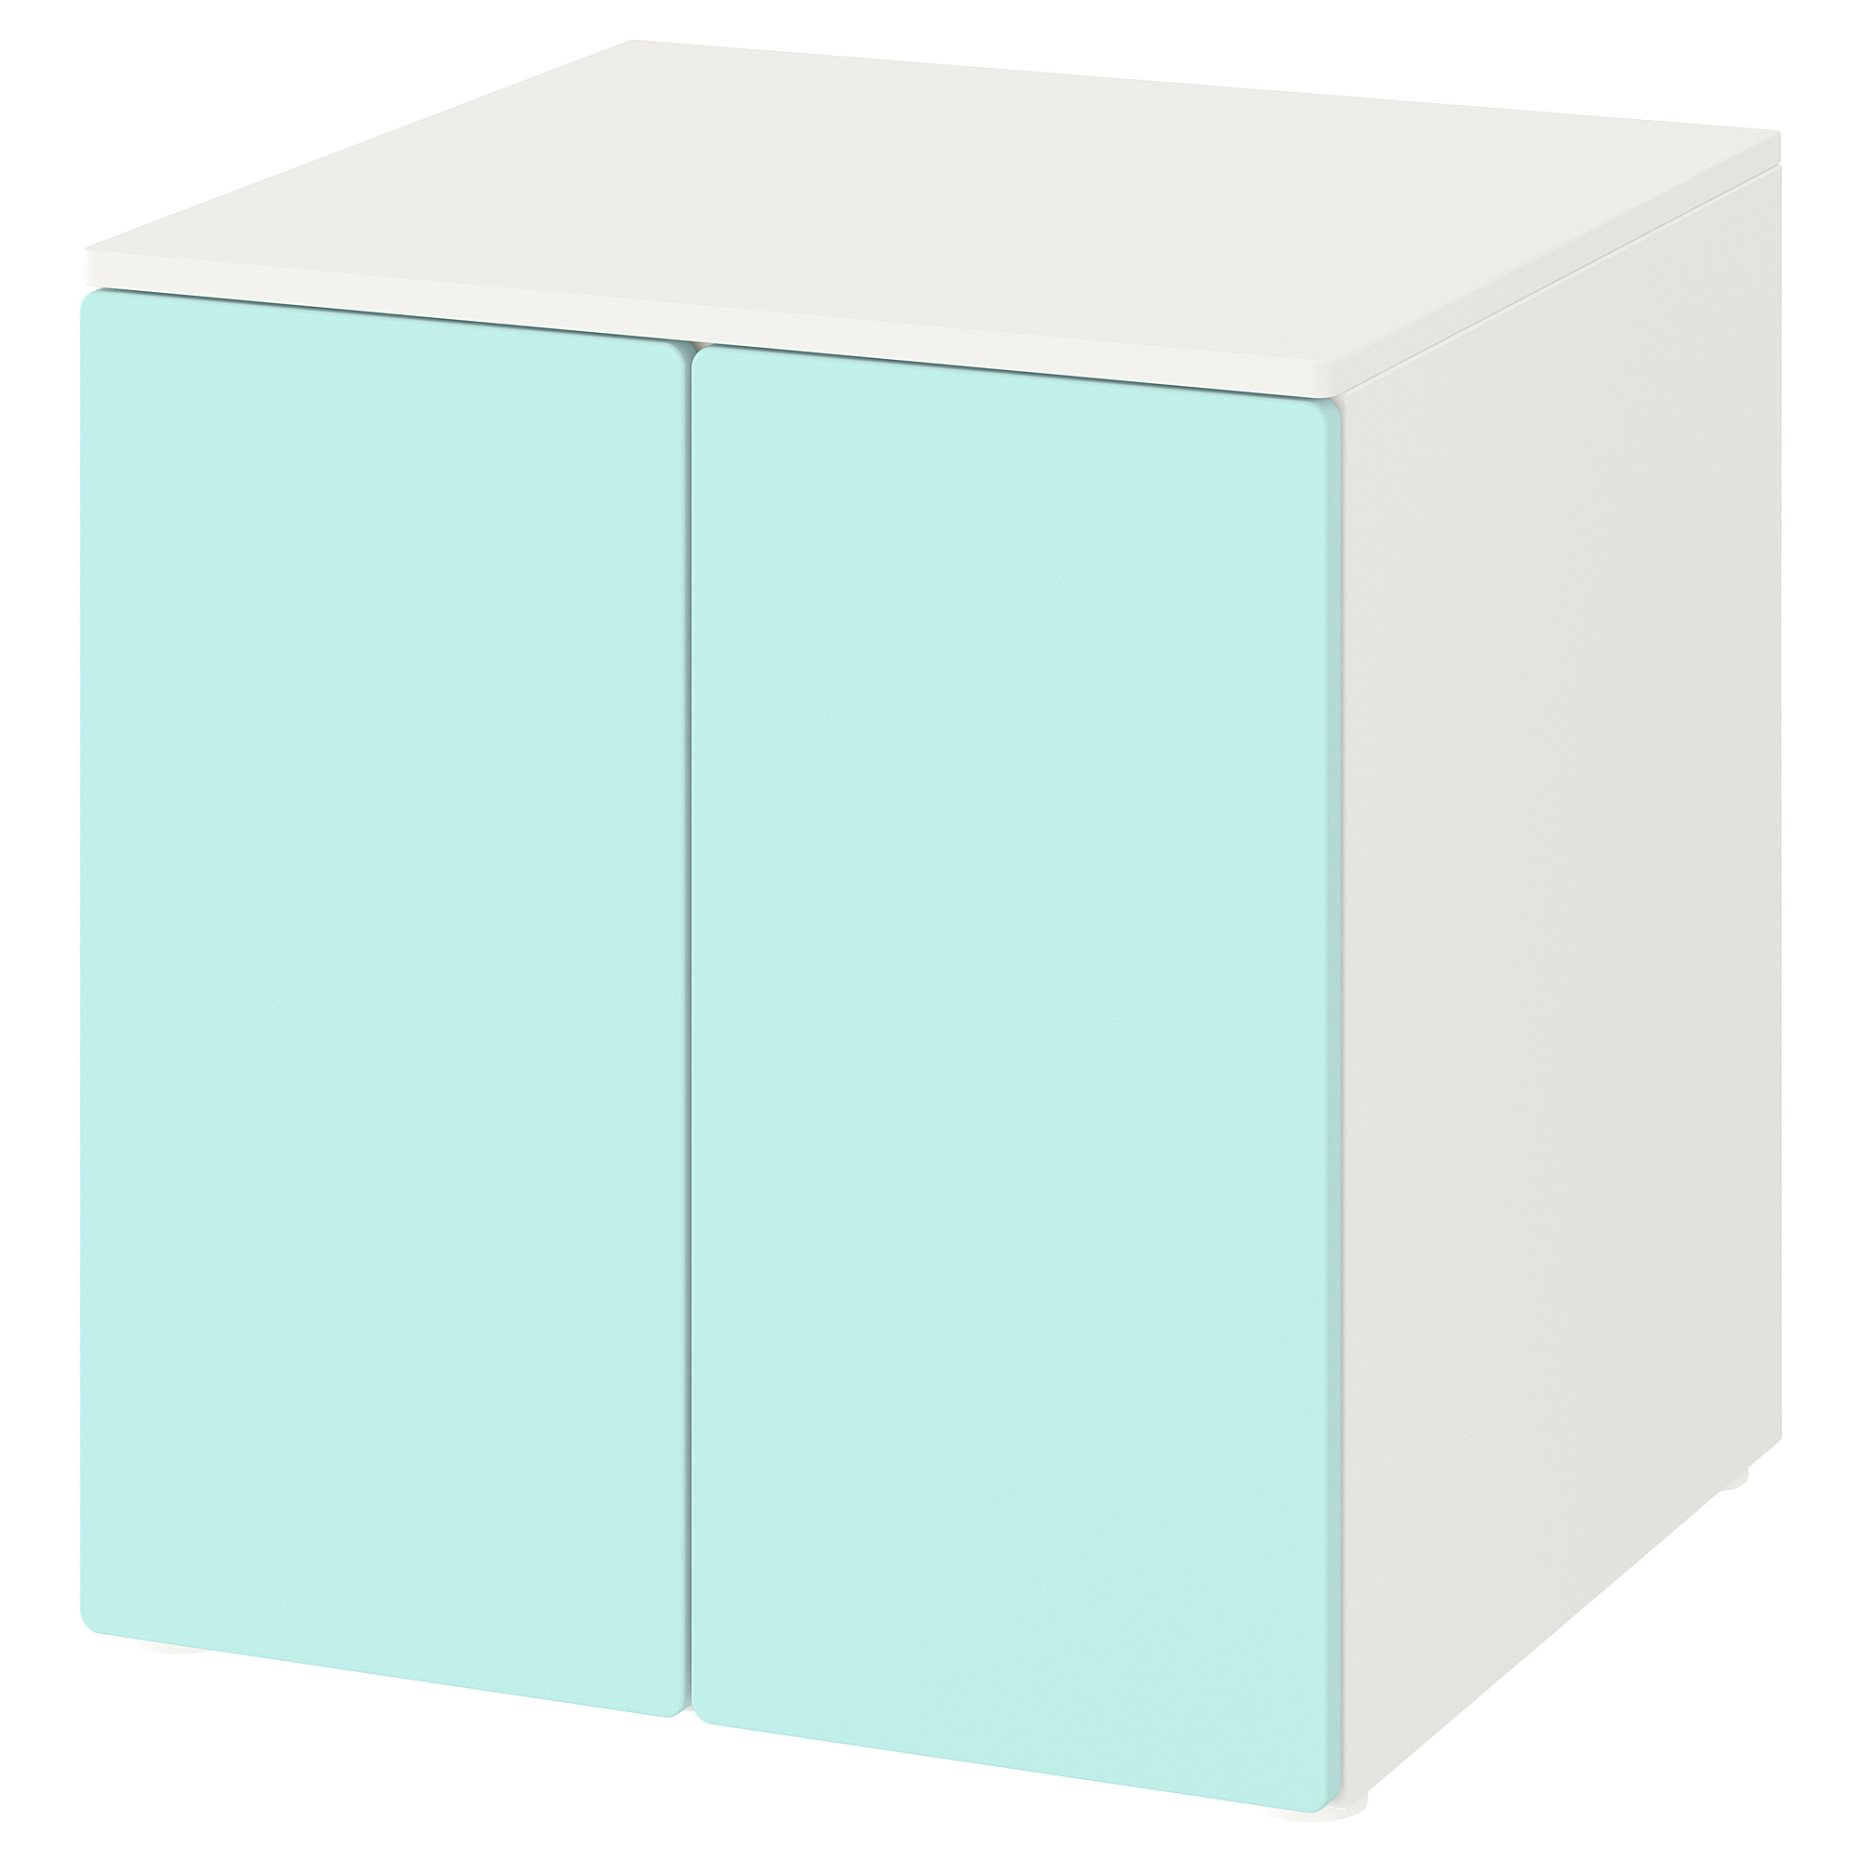 SMASTAD/PLATSA, ντουλάπι με 1 ράφι, 60x57x63 cm, 793.896.63